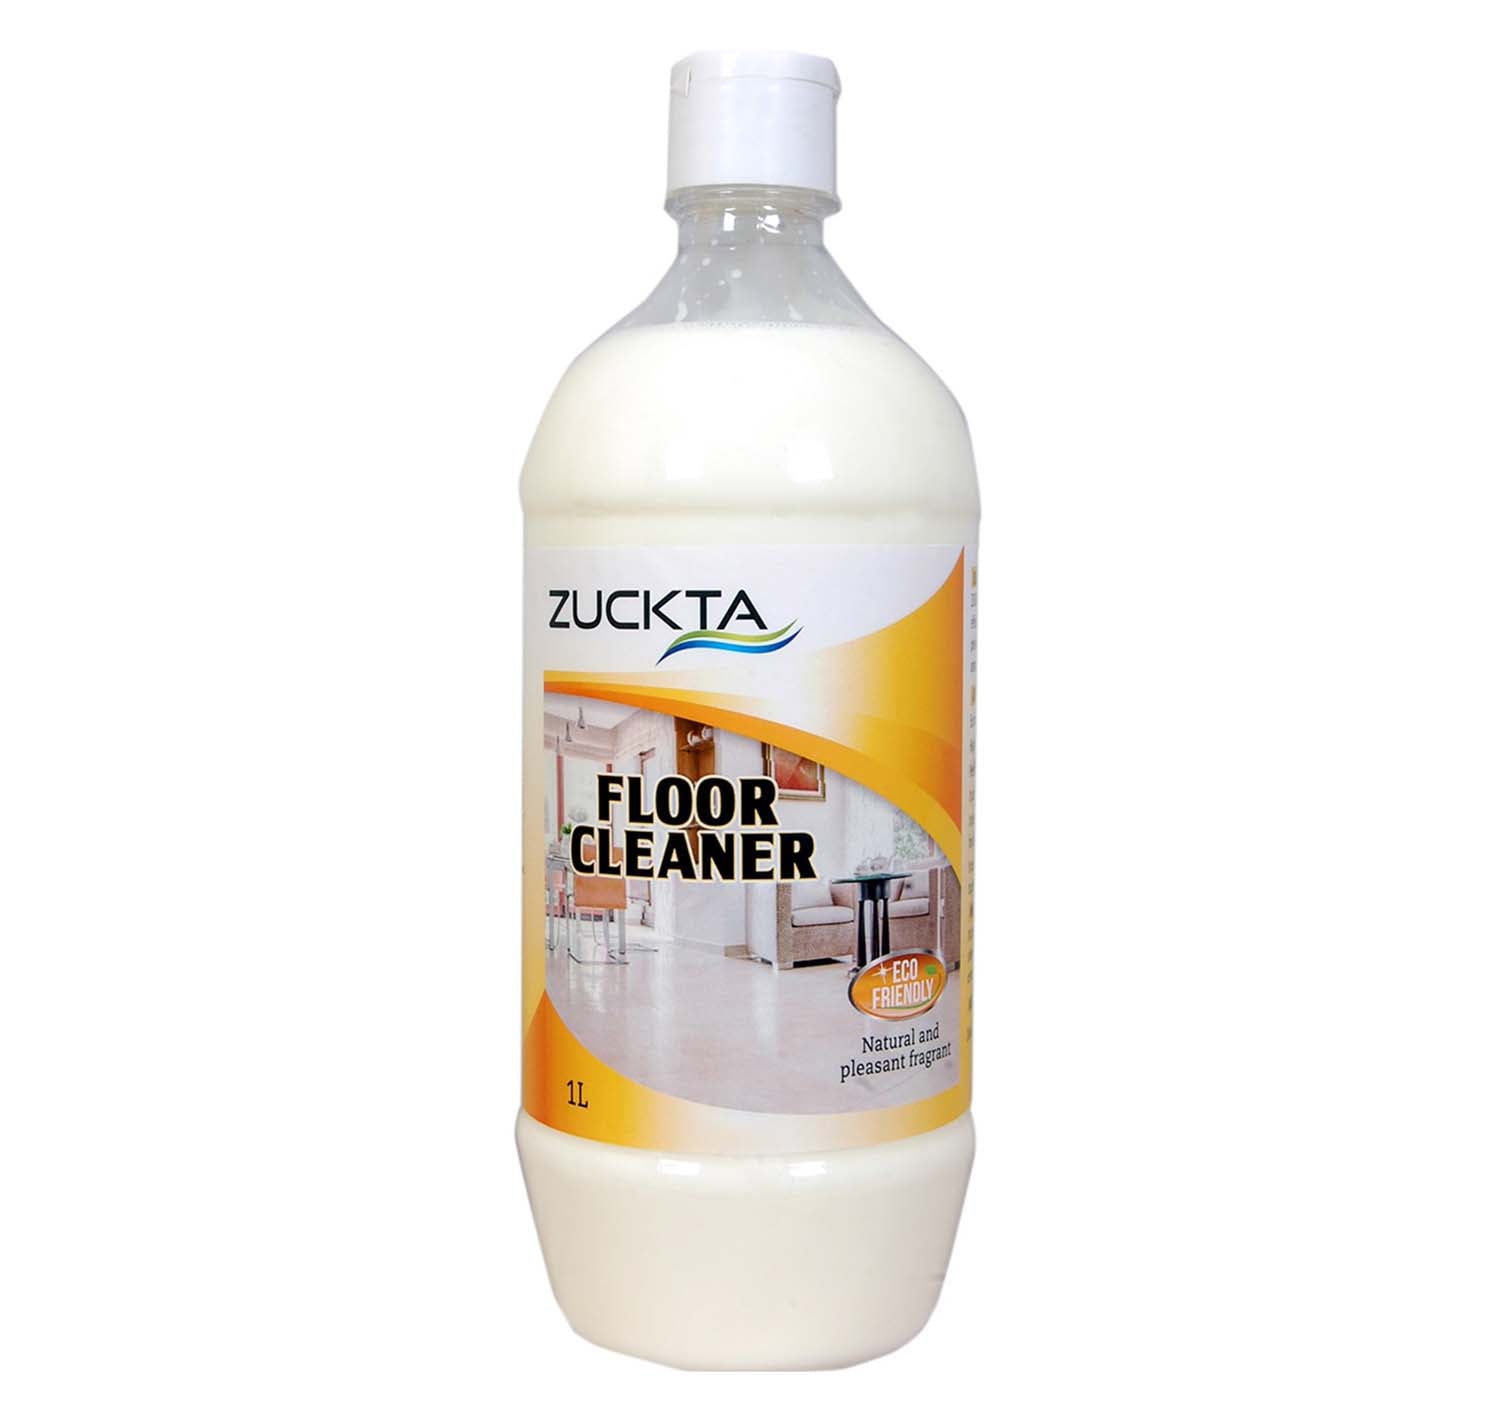 Zuckta Floor Cleaner Eco Friendly Natural & Pleasant Fragrant - 1 Liter